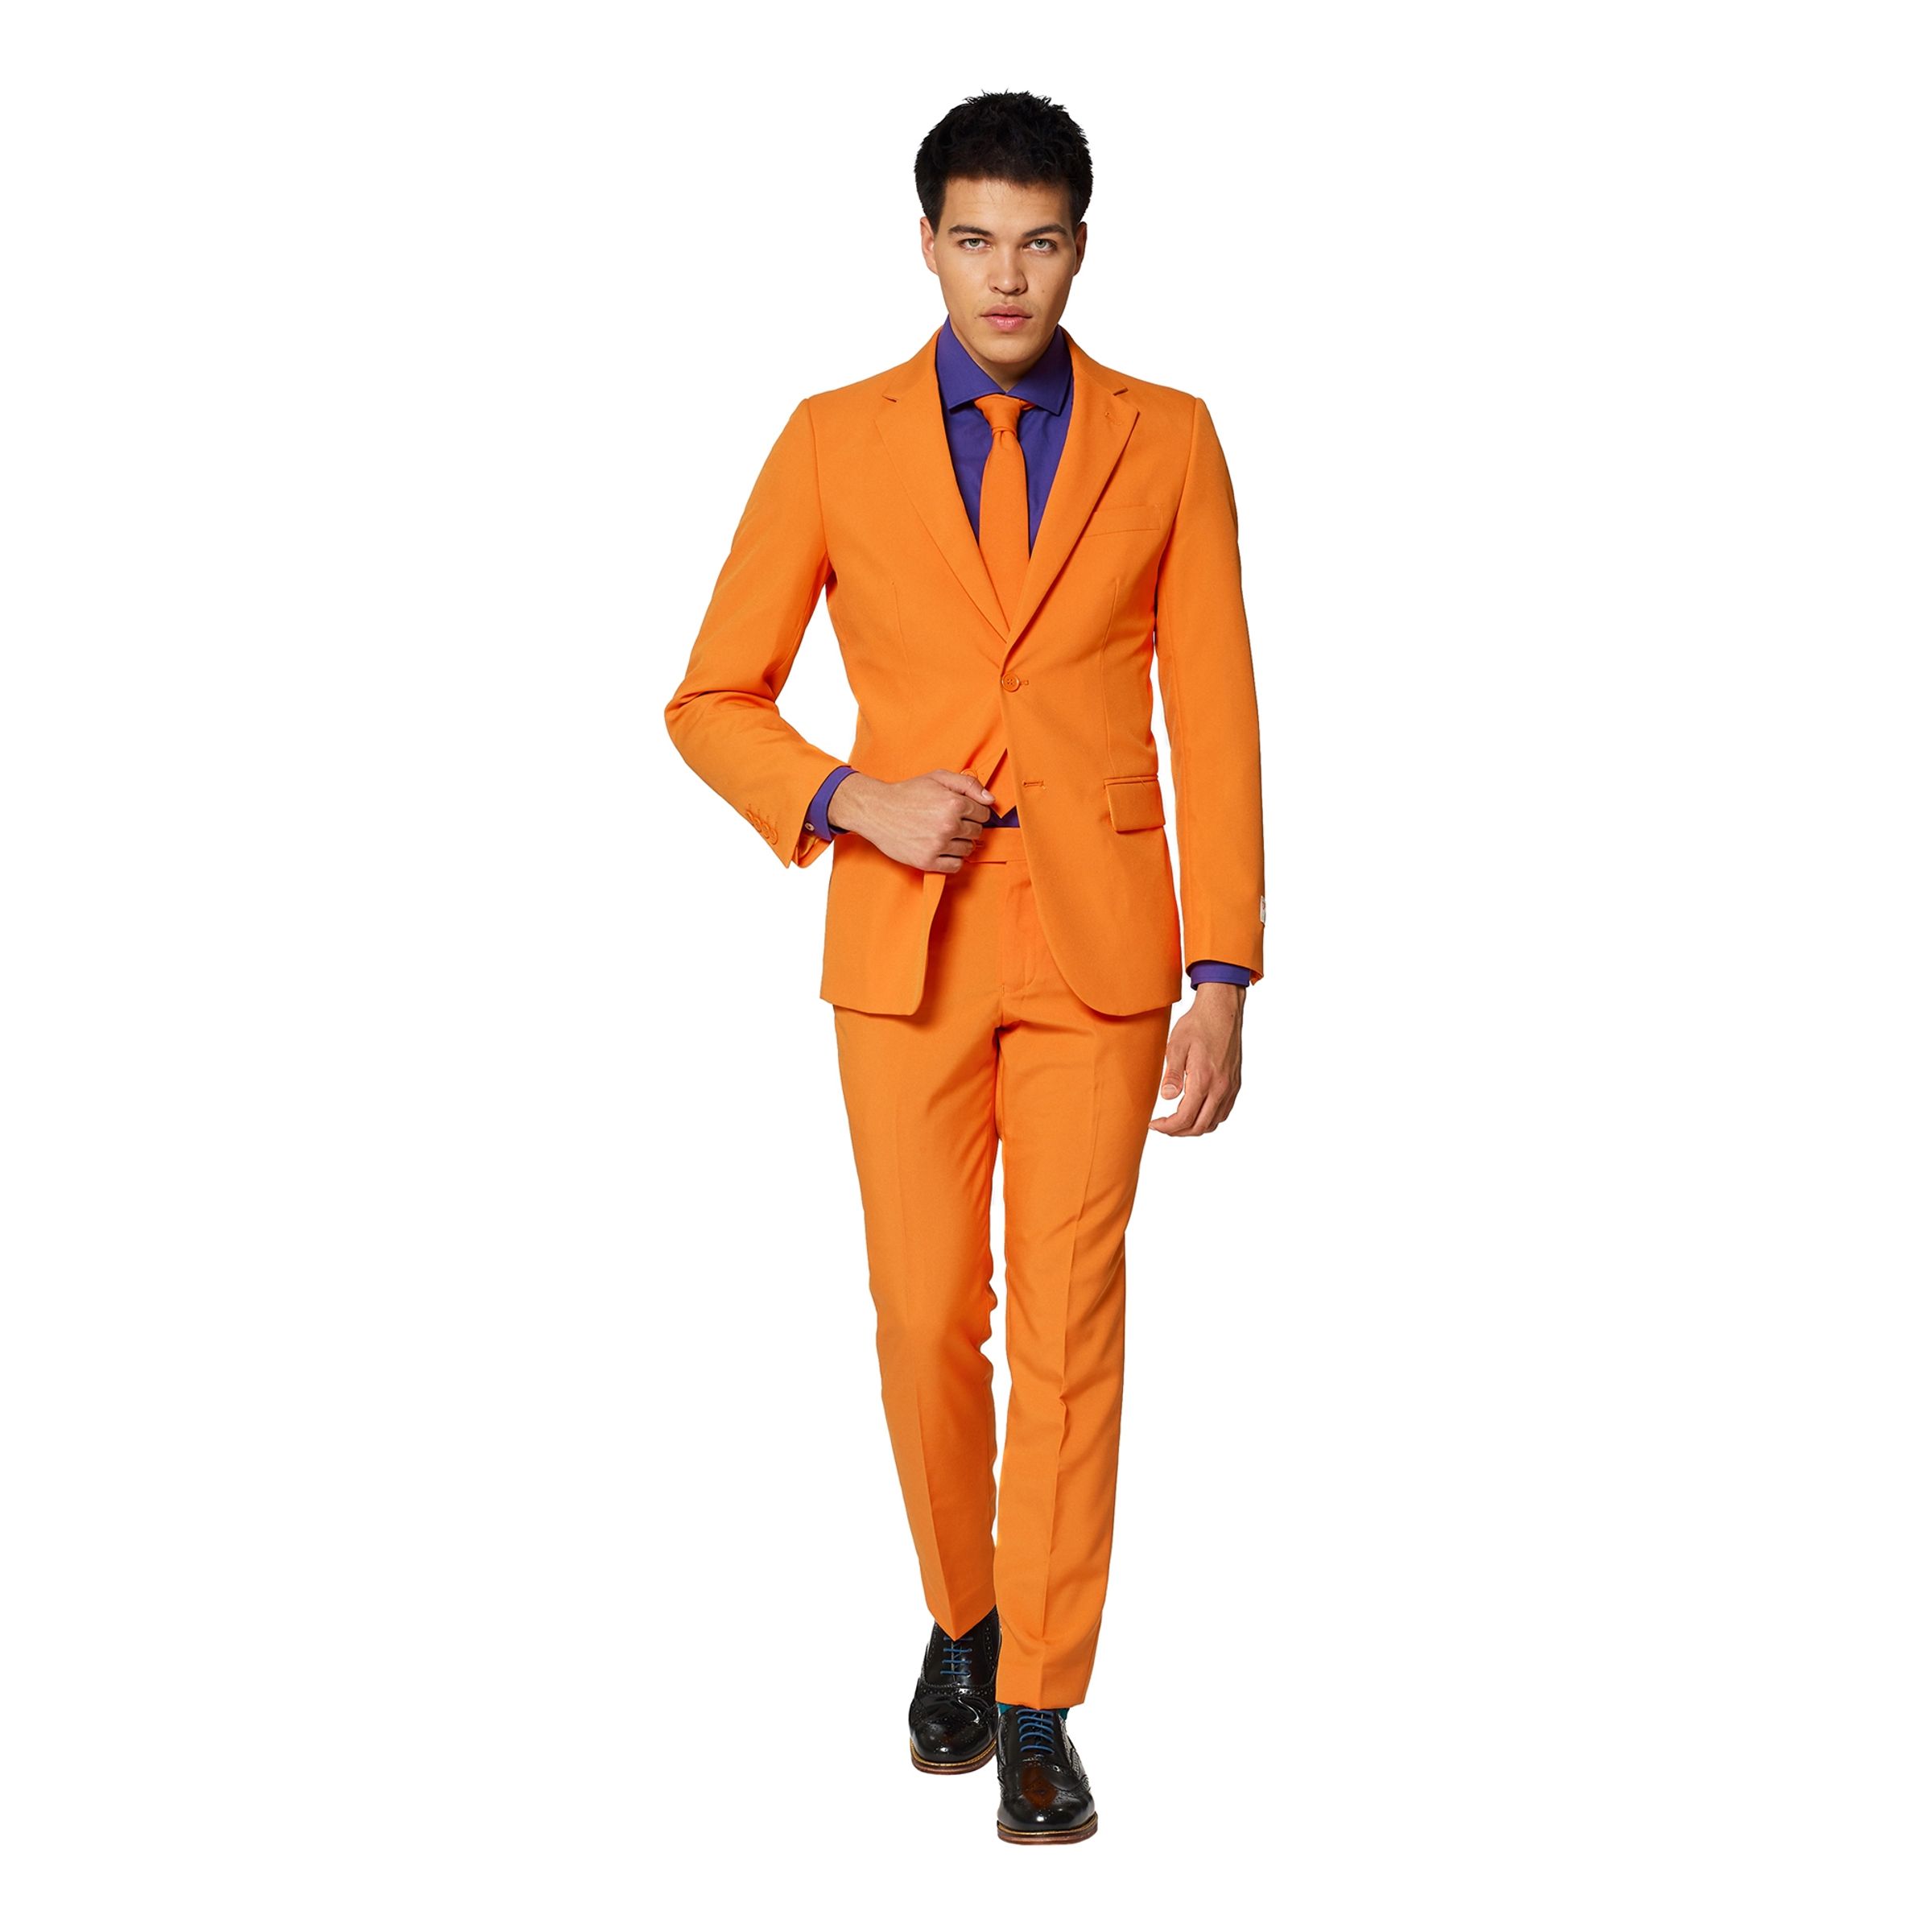 OppoSuits The Orange Kostym - 46